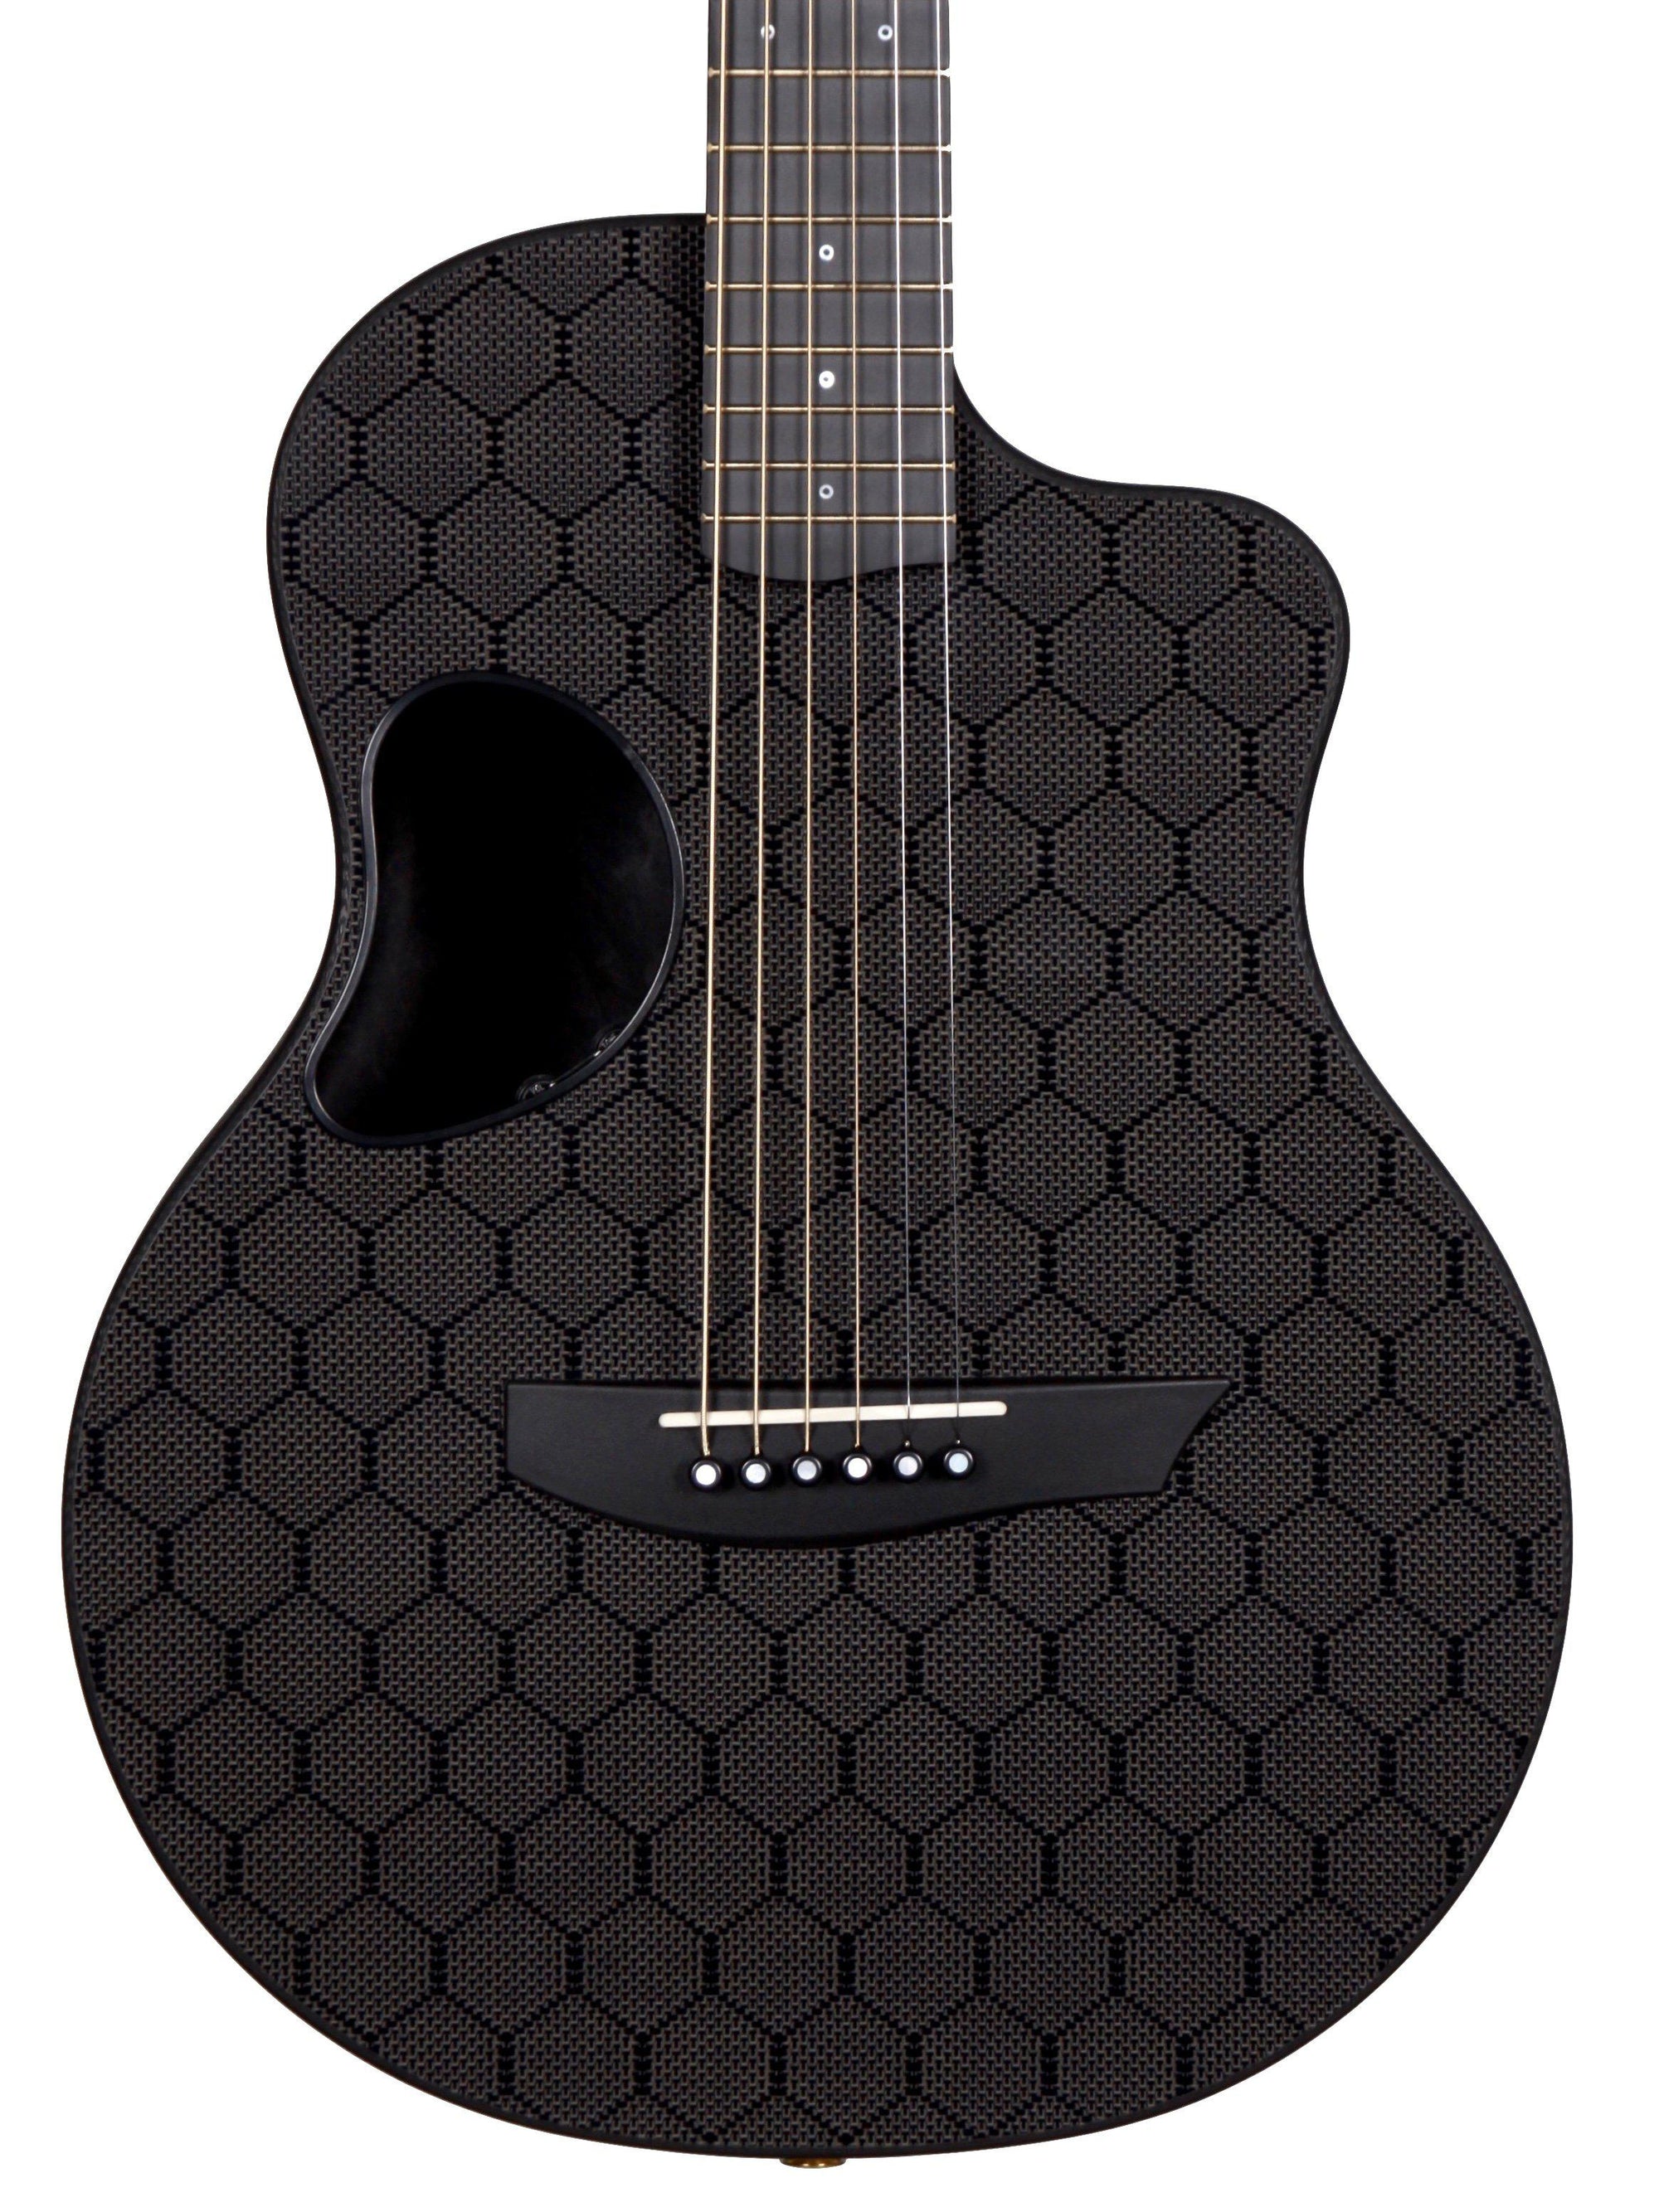 McPherson Carbon Fiber Touring Model Honeycomb Finish and Gold Hardware #GCTH995B - McPherson Guitars - Heartbreaker Guitars